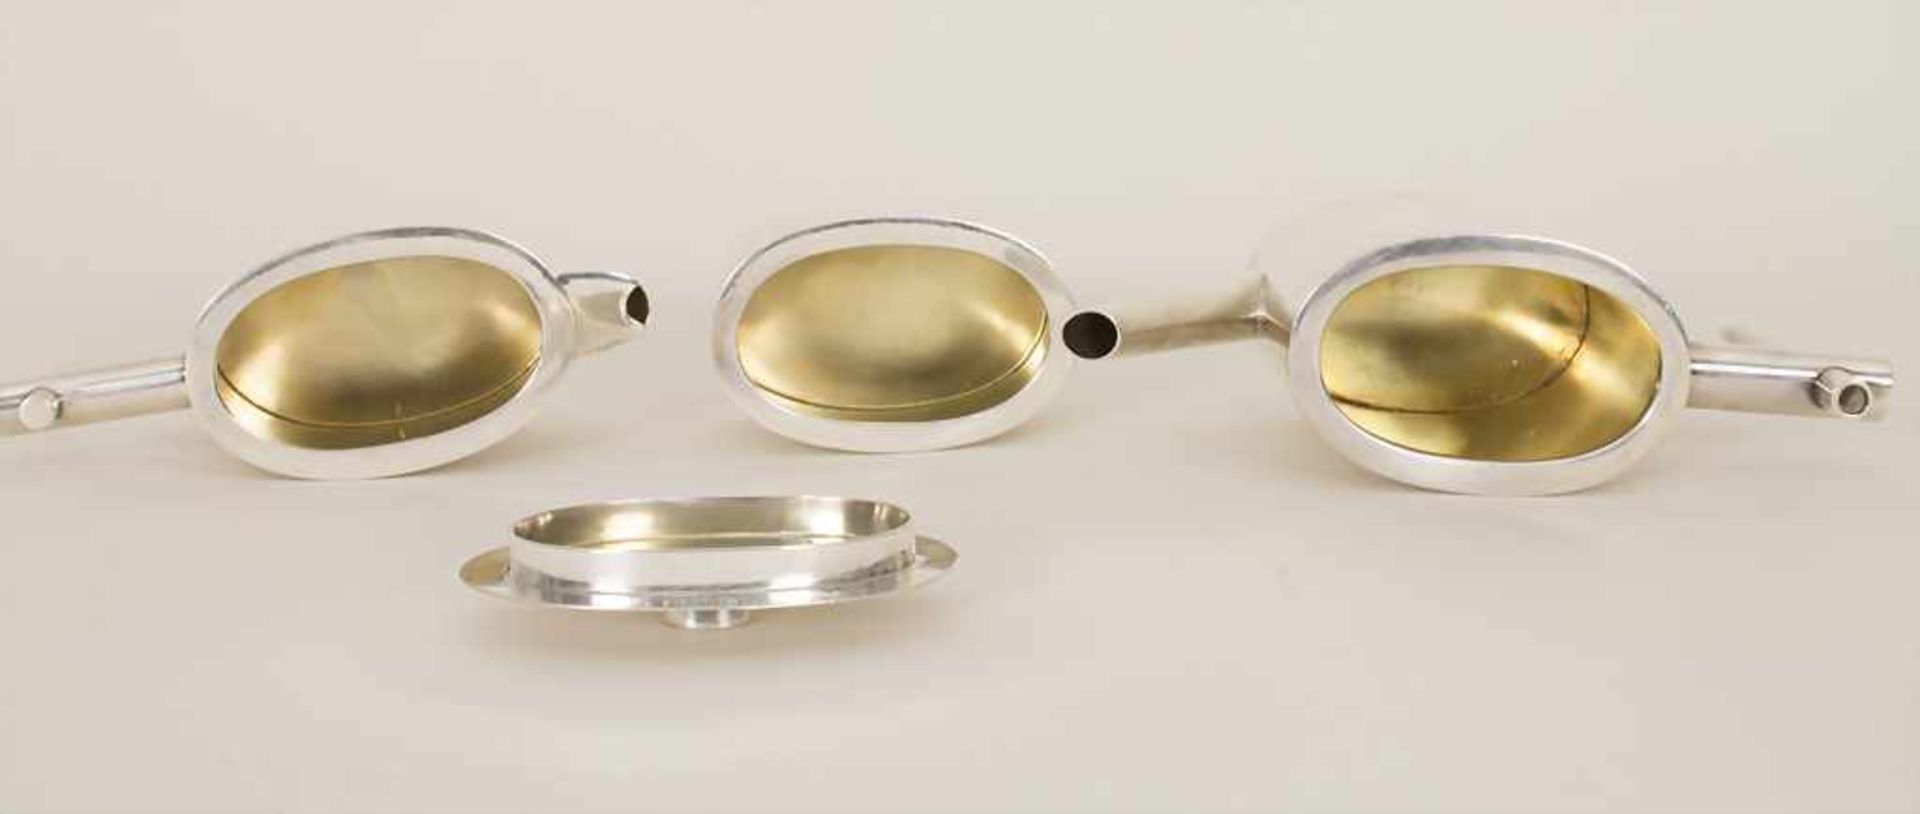 Mokka-Set / A silver mocha set, G. Vavassori, Mailand / Milano, 20. Jh.bestehend aus eienr Kanne, - Image 6 of 7